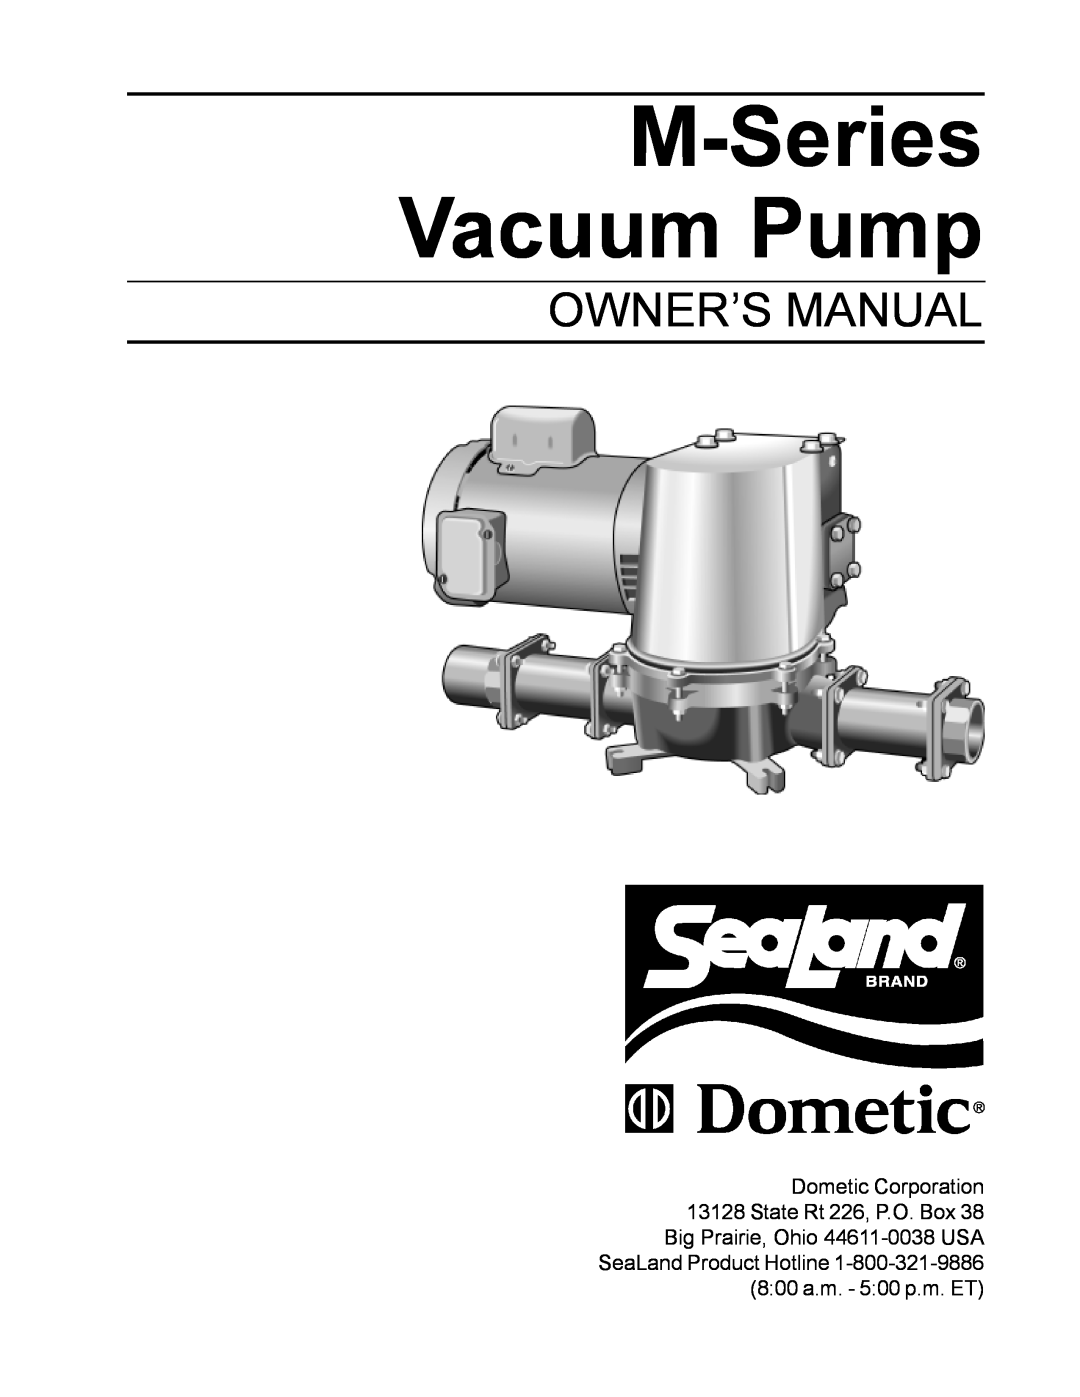 SeaLand owner manual M-SeriesVacuum Pump, Dometic Corporation 13128 State Rt 226, P.O. Box 